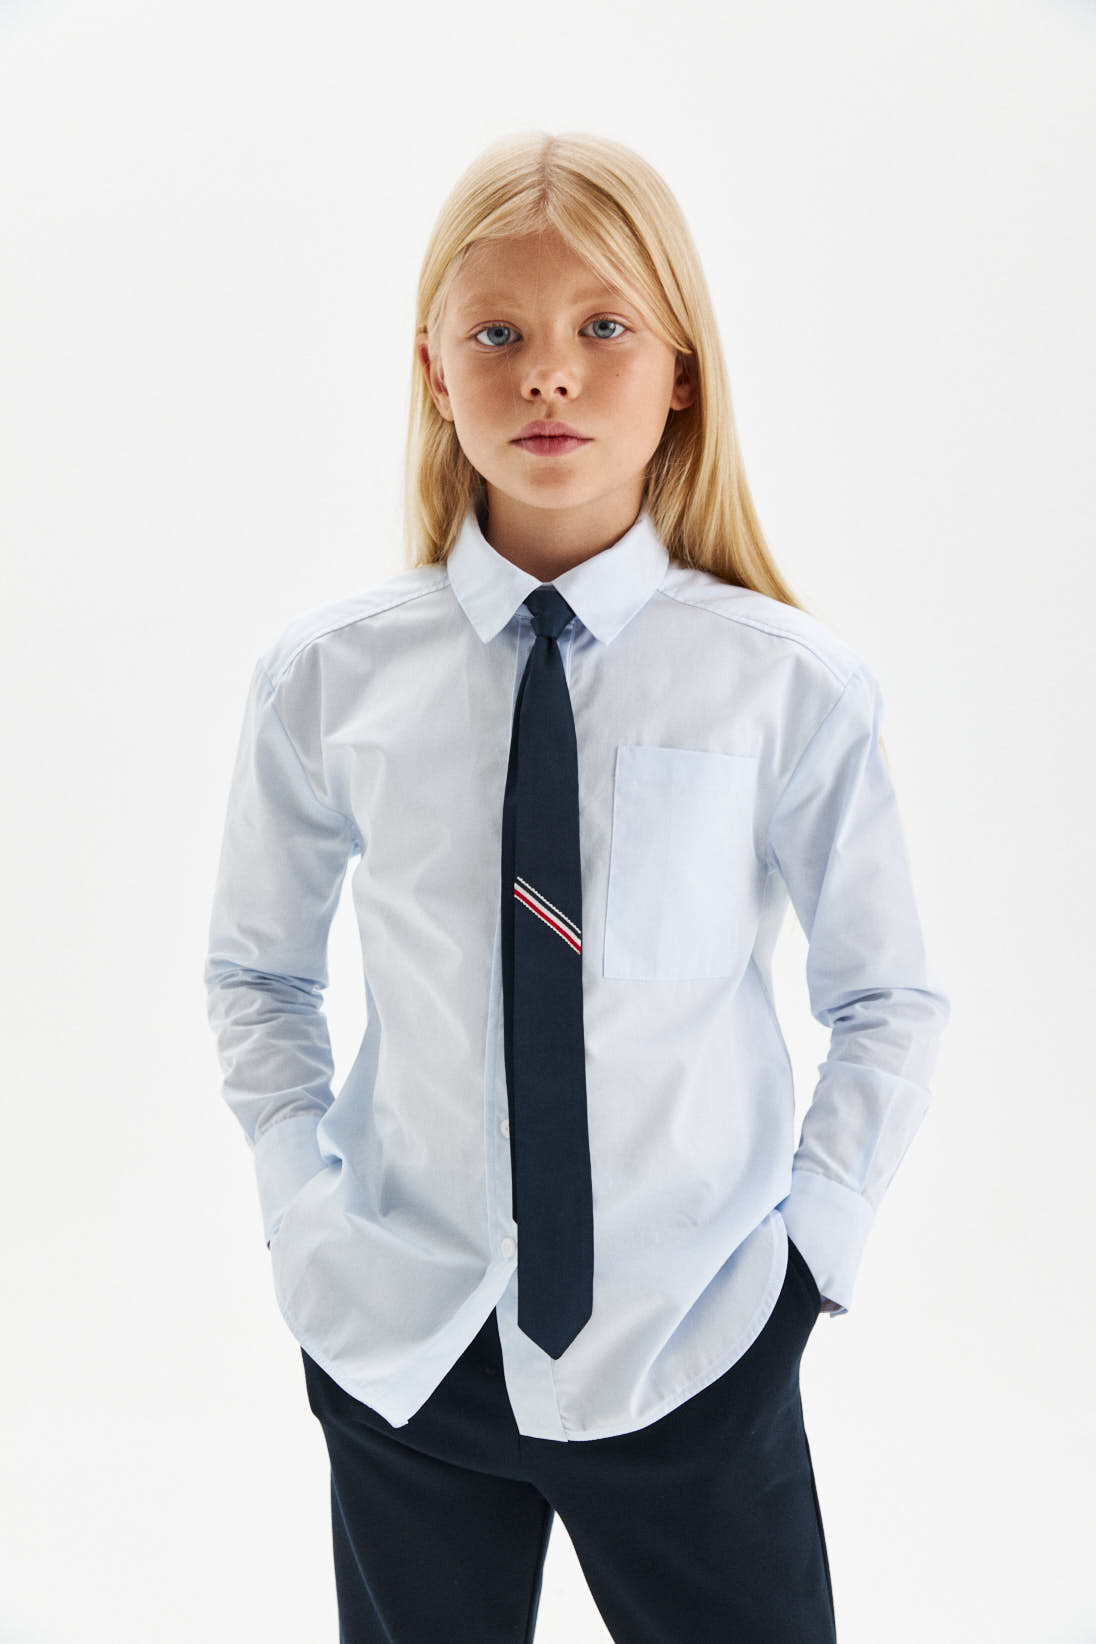 Девочка с галстуком